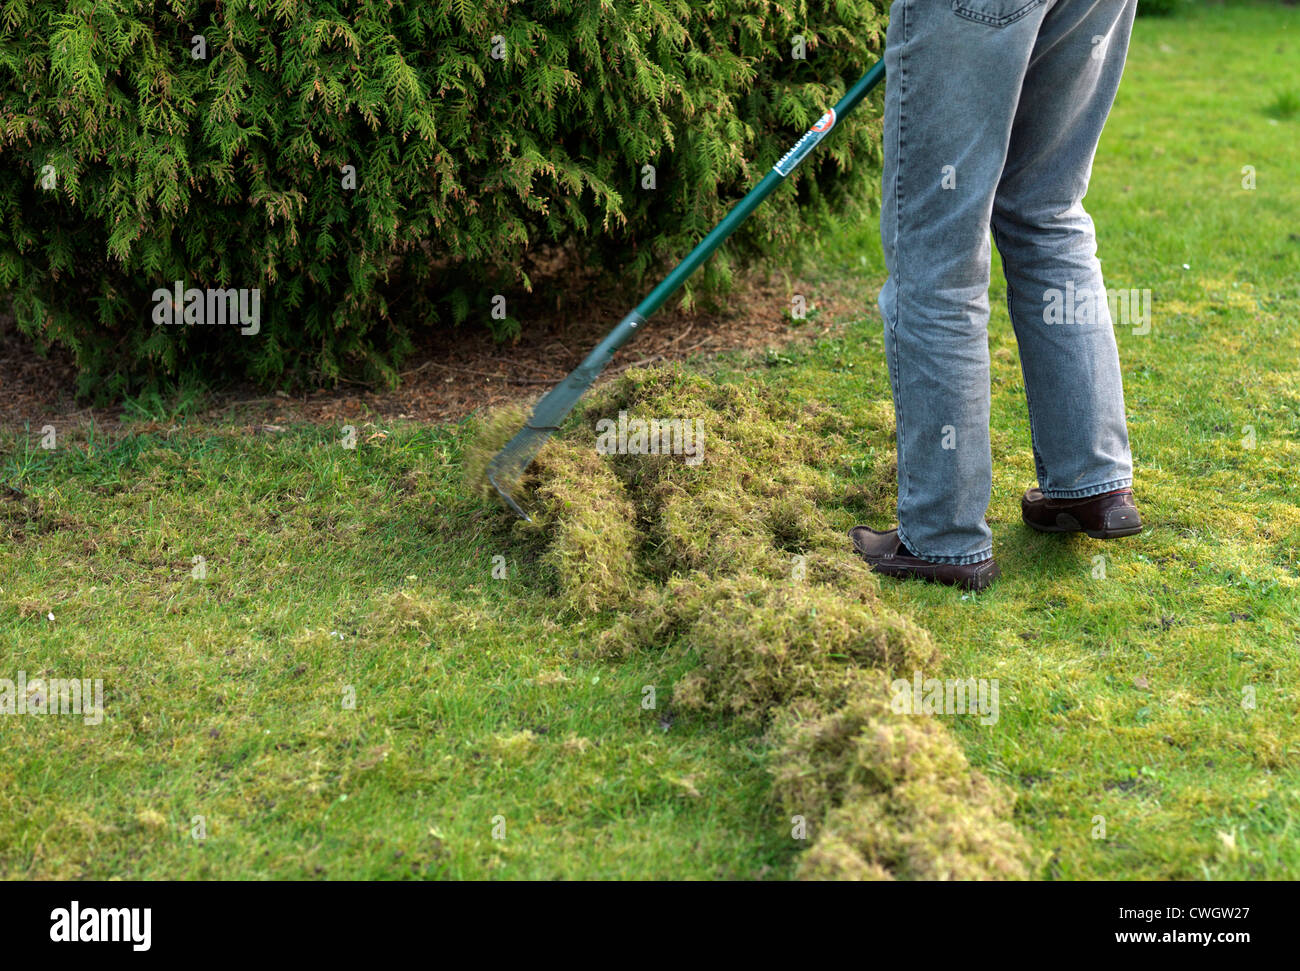 Scarification or Scarifying a Lawn with a Rake In A Garden England Stock Photo